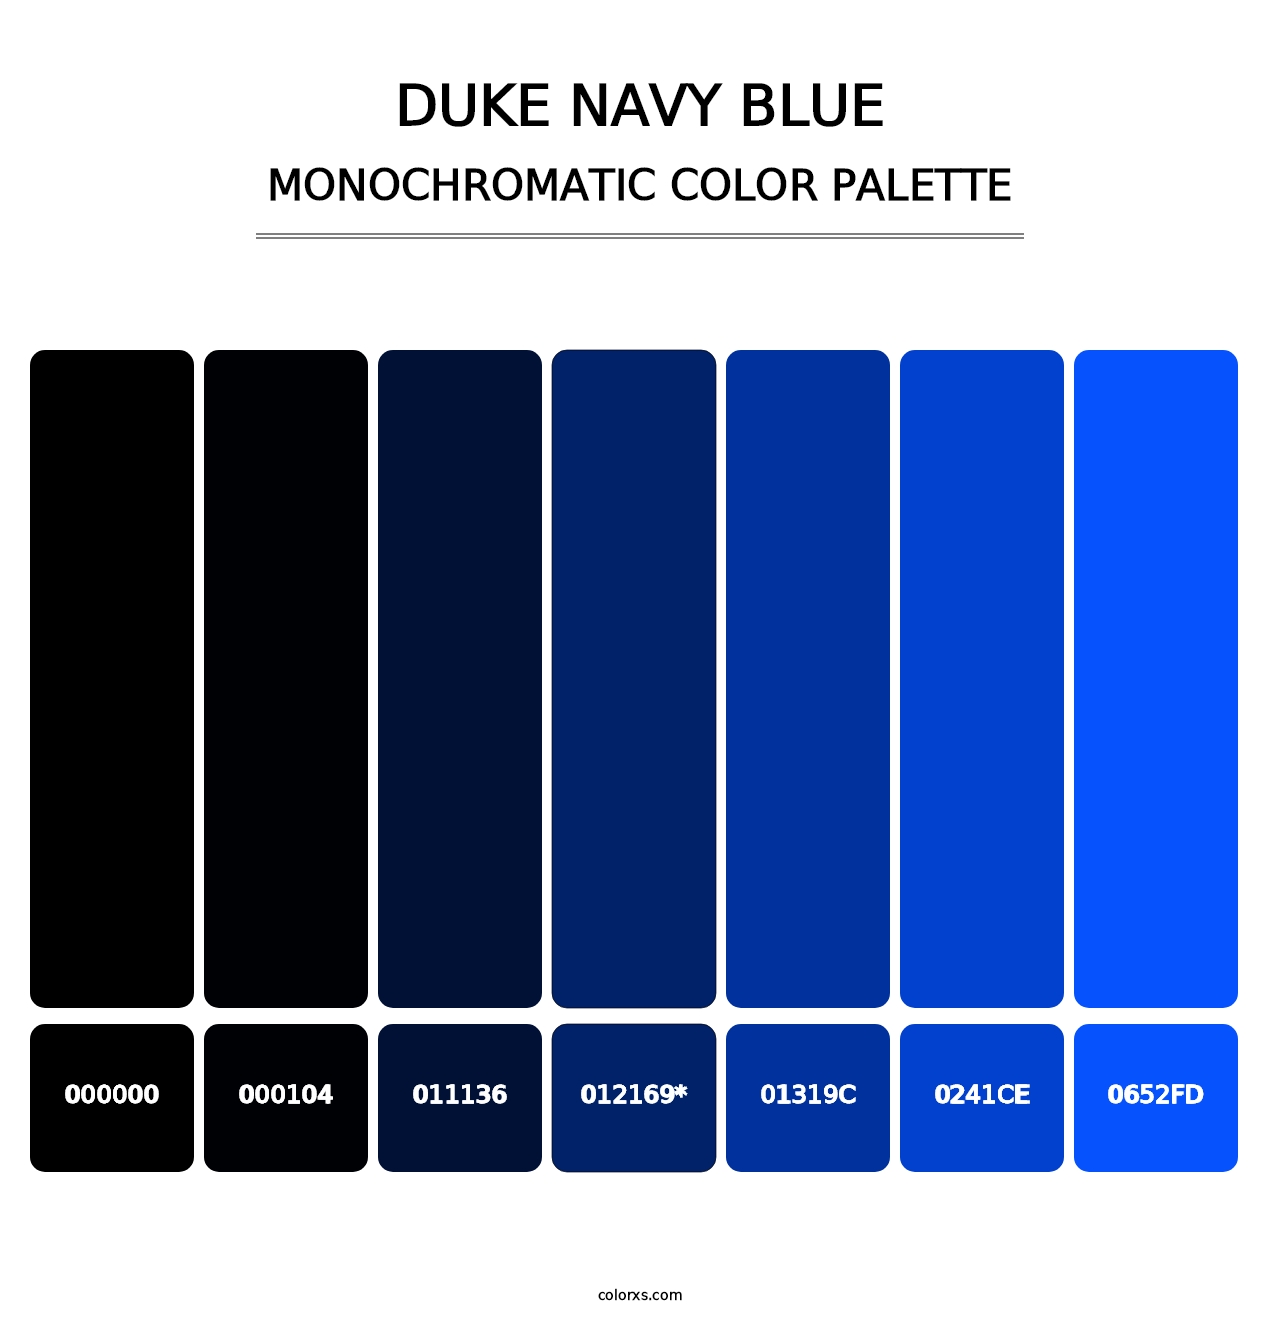 Duke Navy Blue - Monochromatic Color Palette